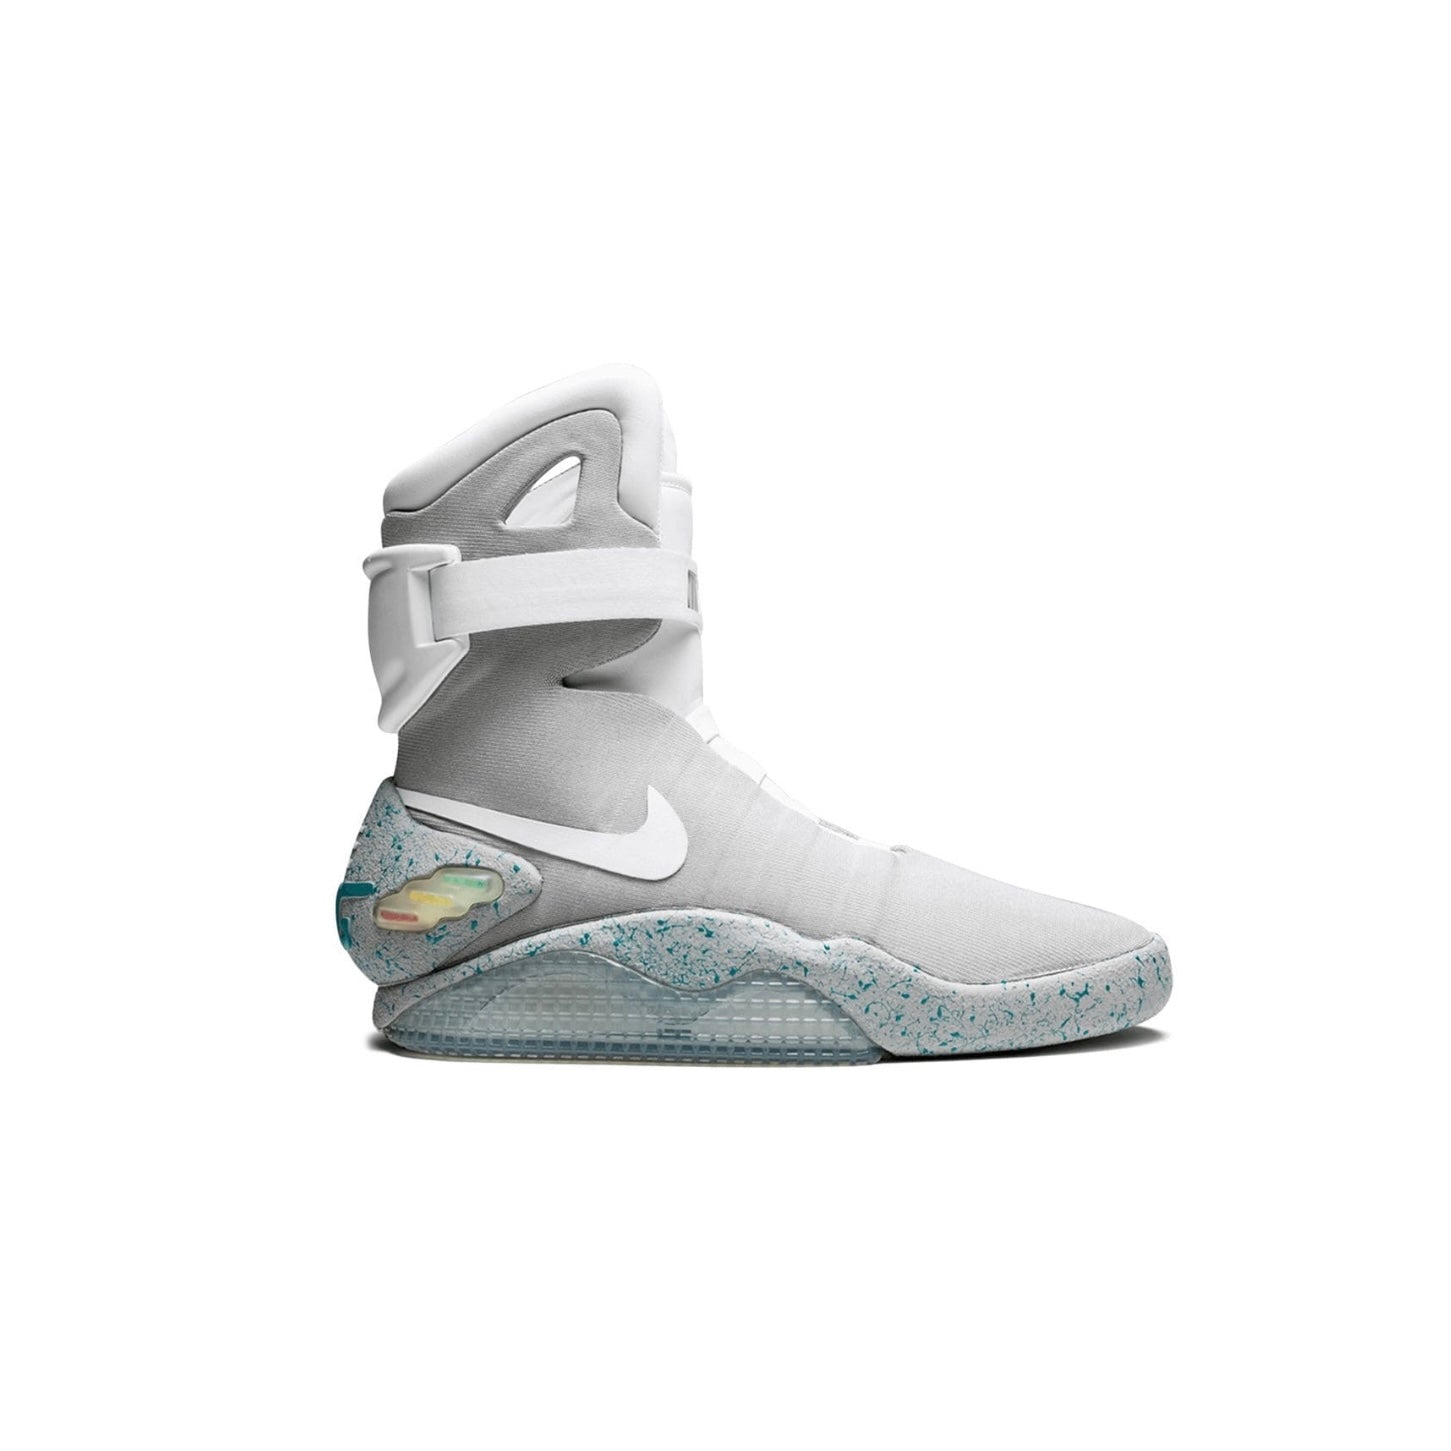 muy silencio Inhalar Nike MAG Back to the Future 2011 – THE 99 DRAW